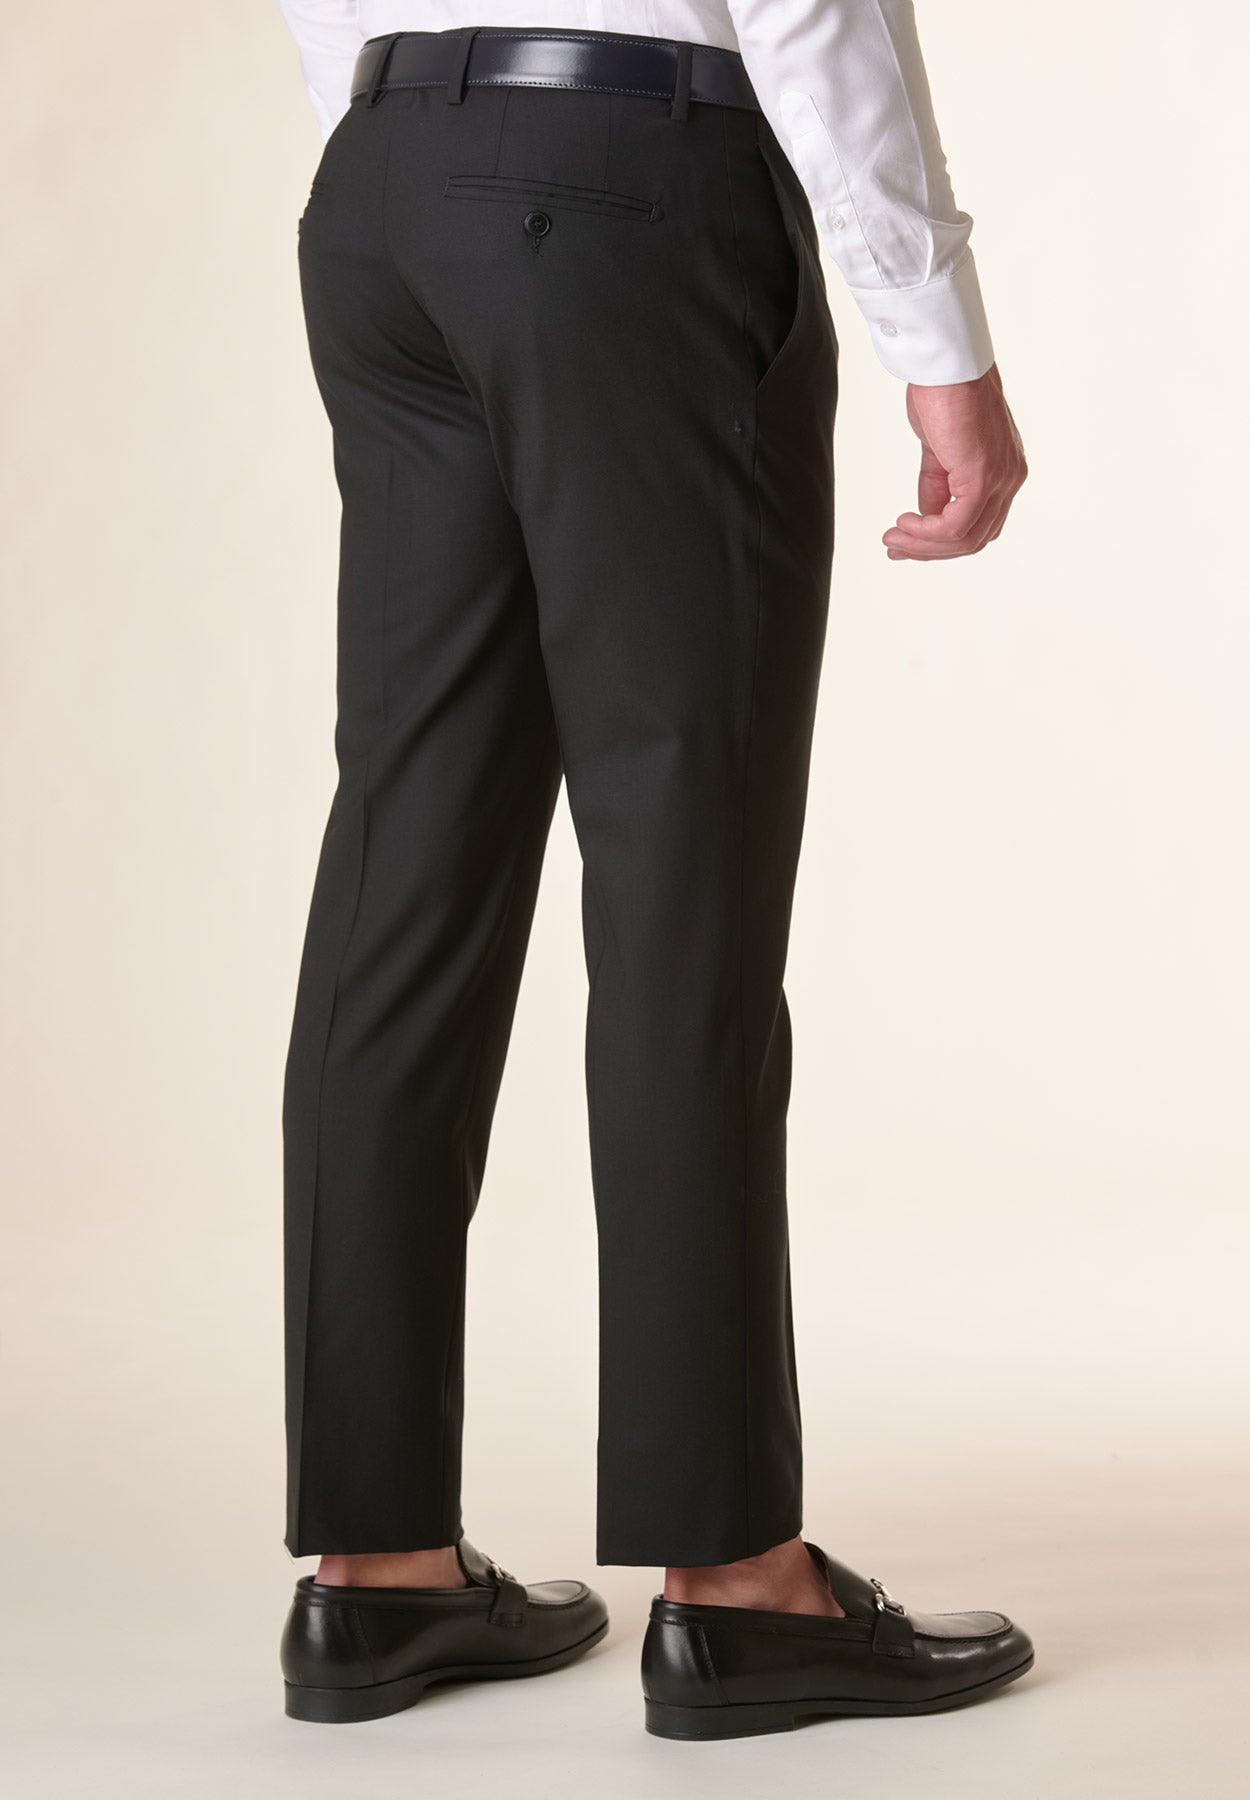 Pantalone nero tela lana stretch custom fit